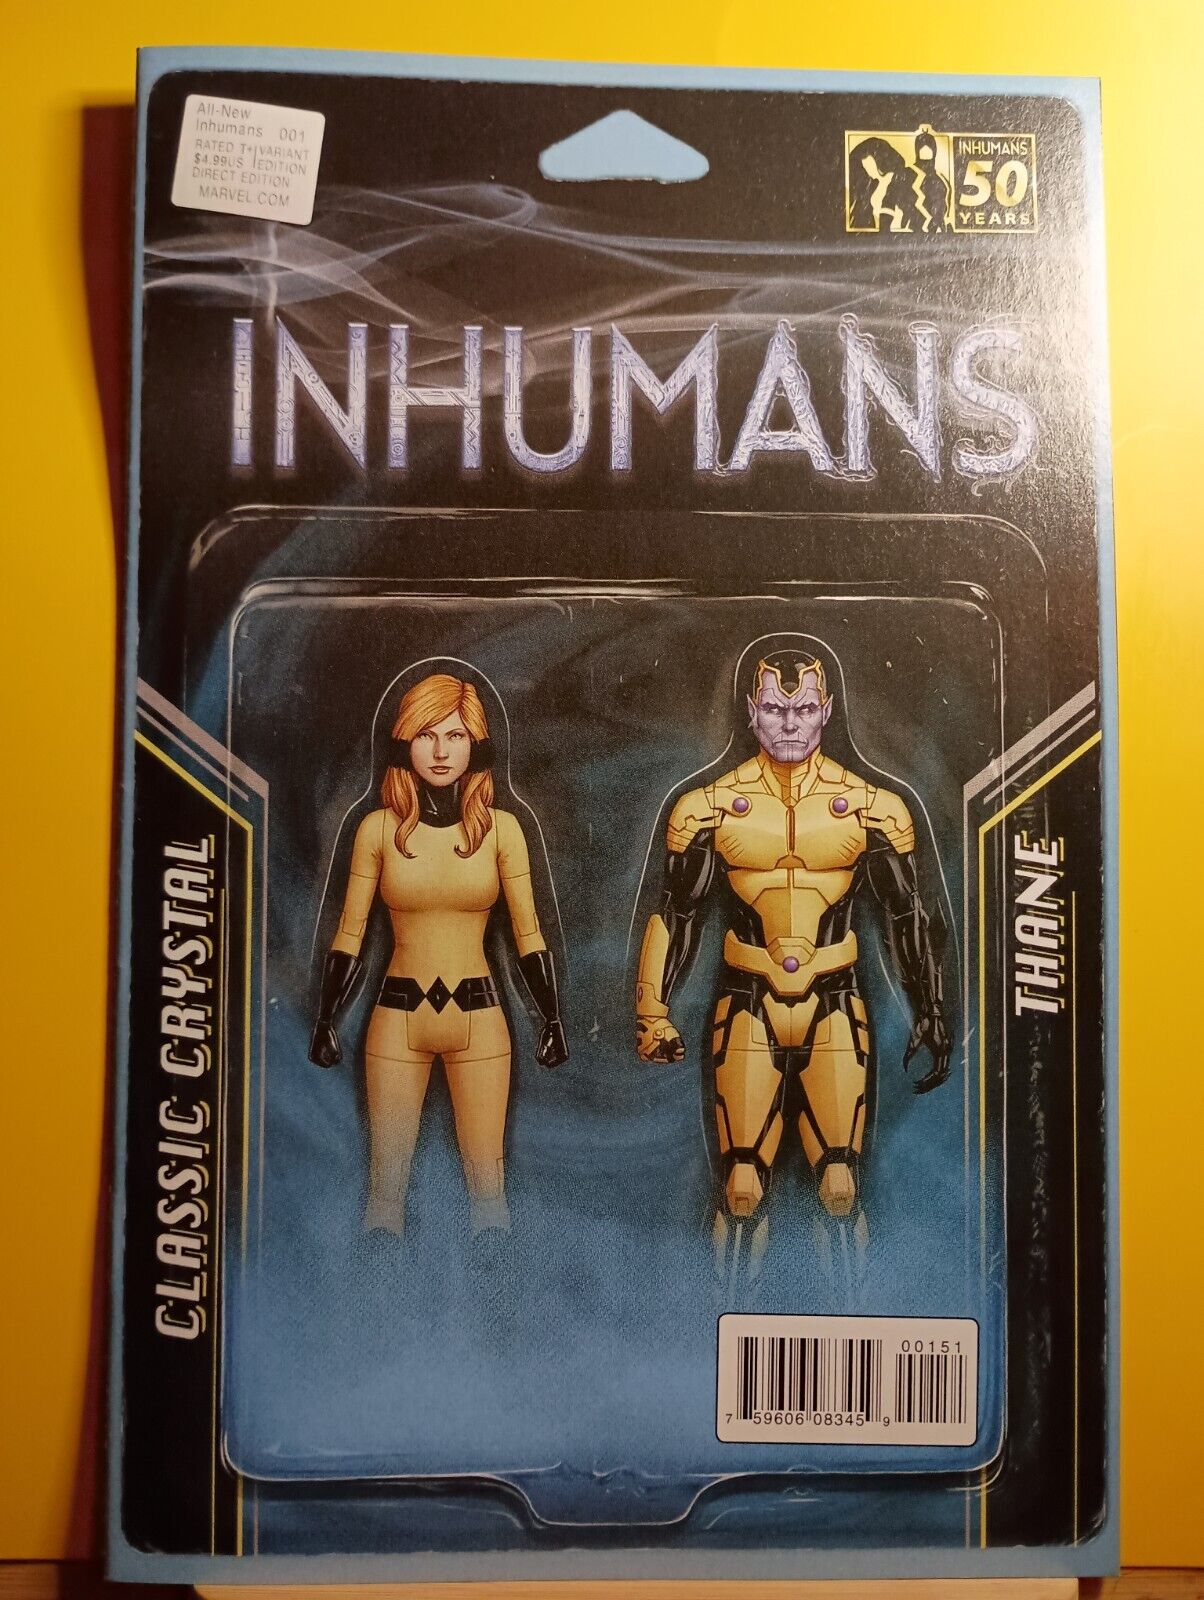 2016 Marvel Comics All New Inhumans 1 John Tyler Christopher Acton Figure Cover